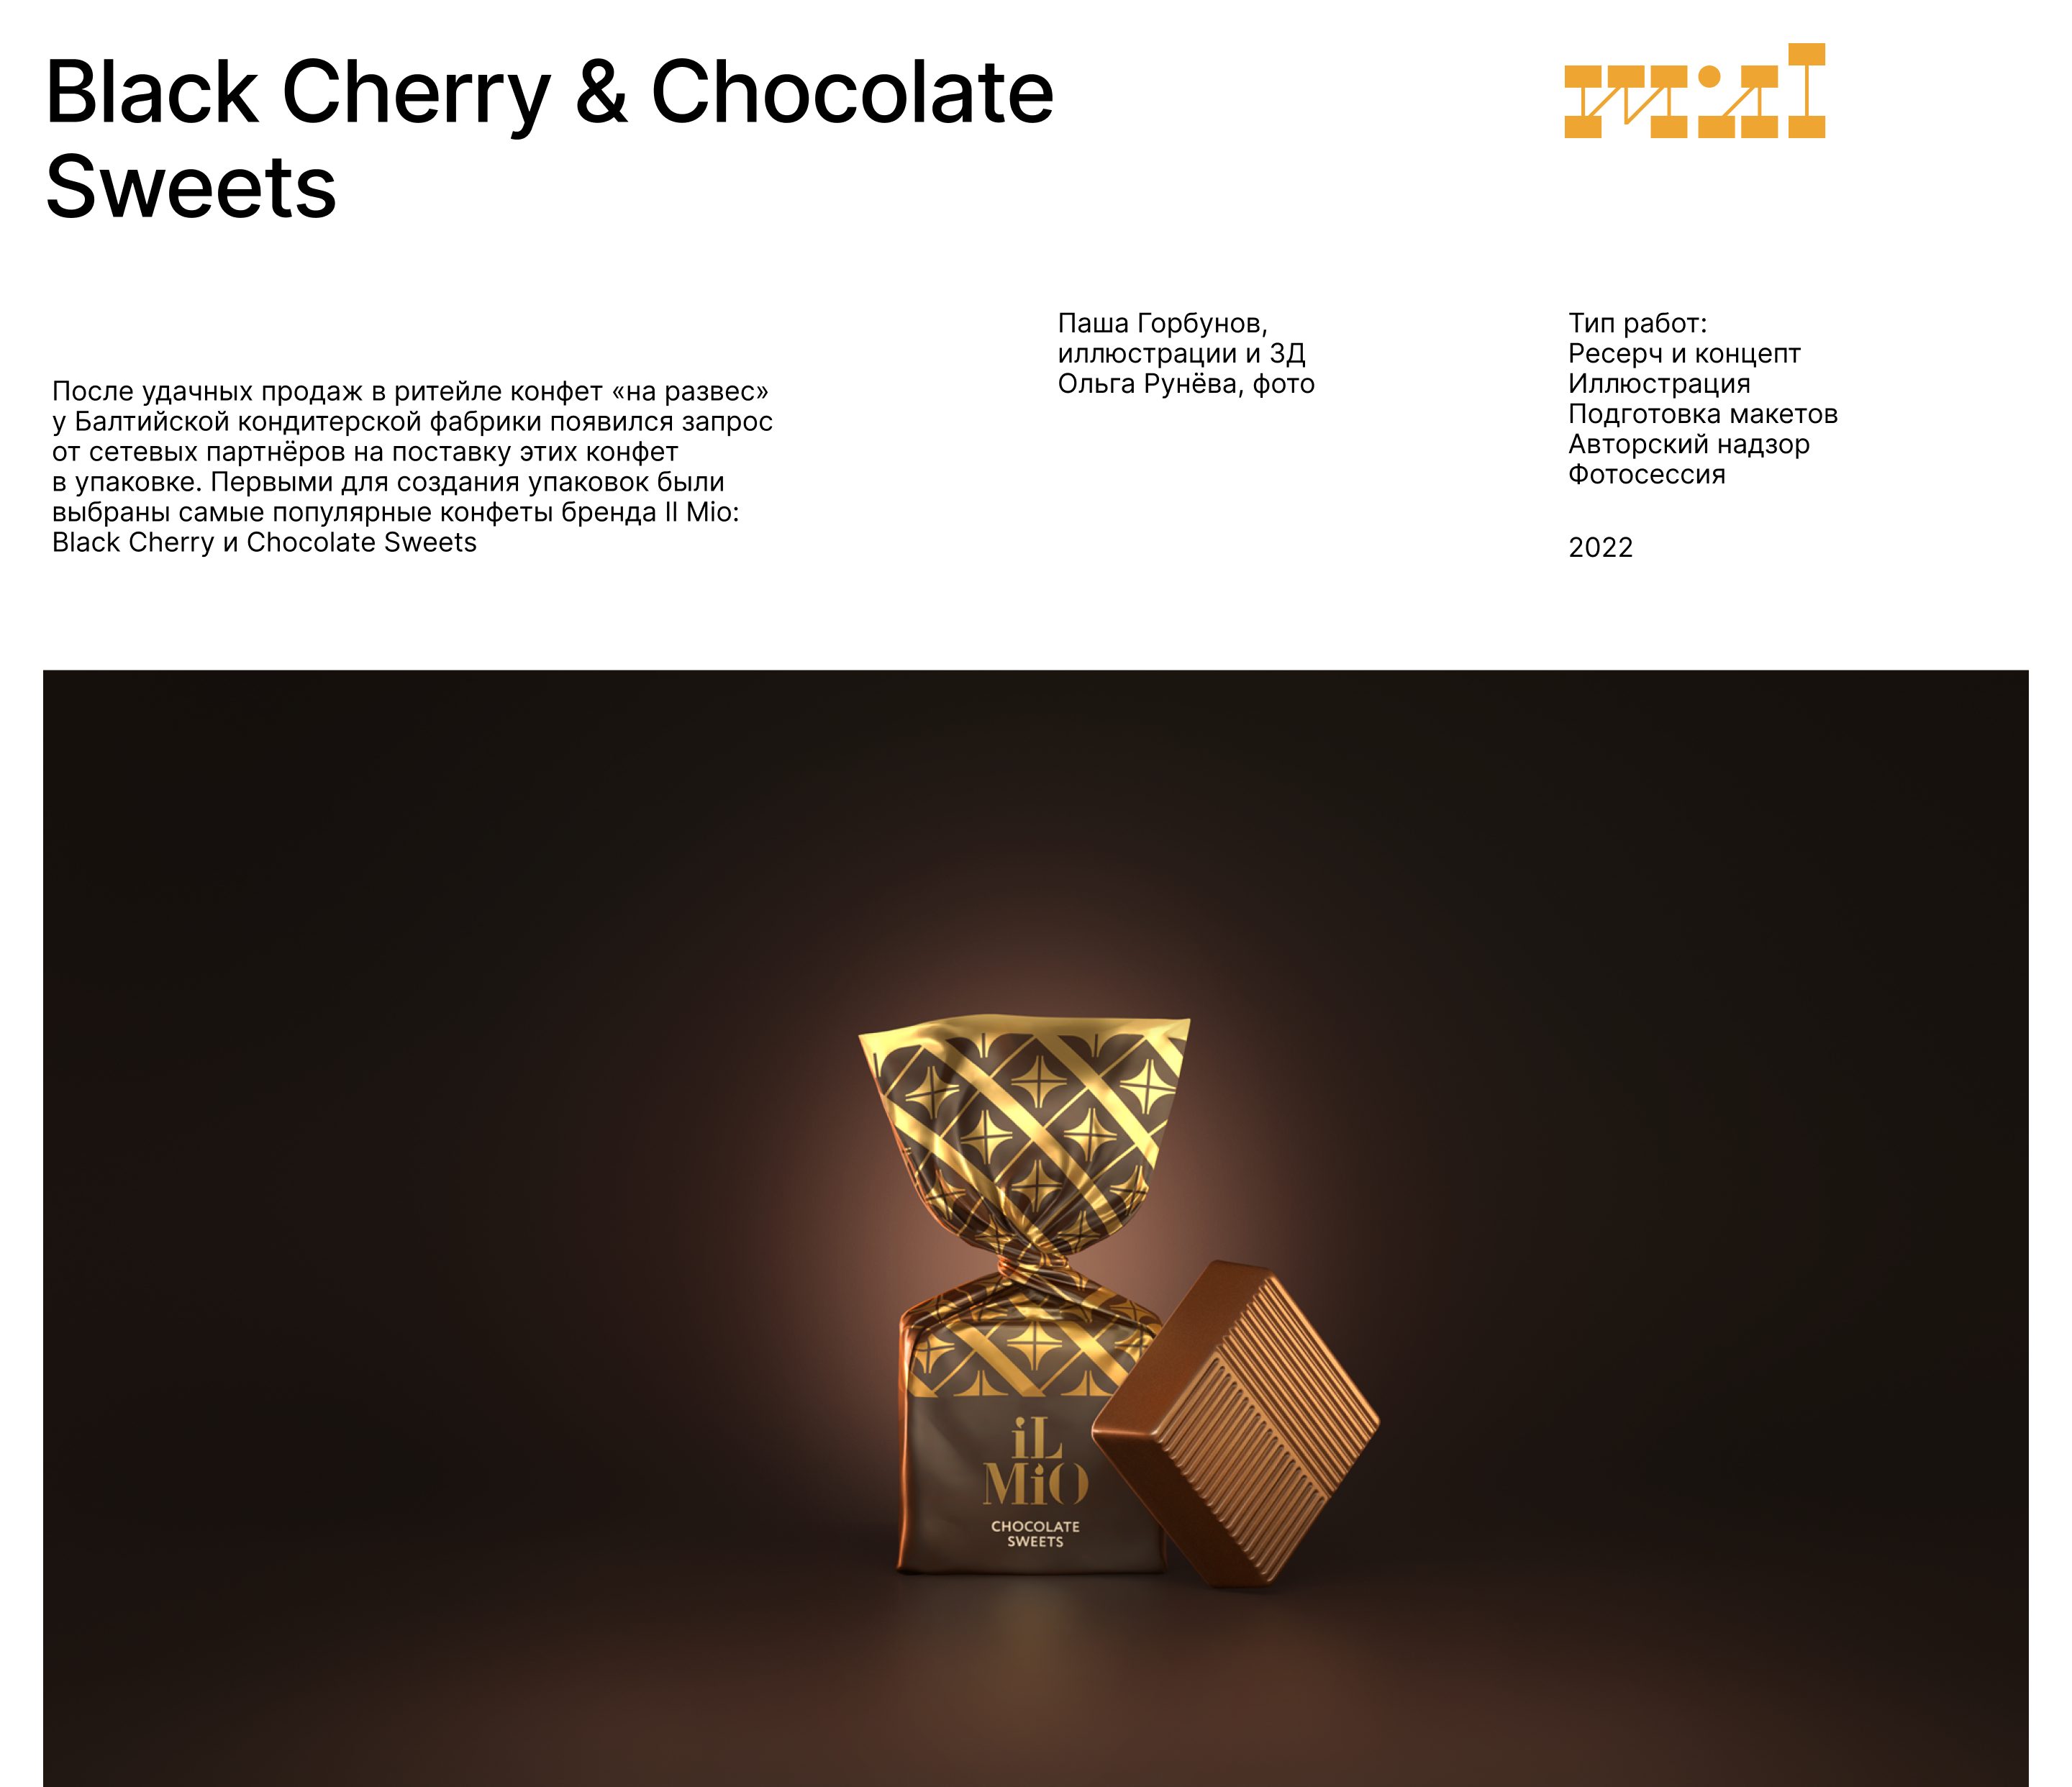 Black Cherry & Chocolate Sweets — Изображение №1 — Графика, 3D на Dprofile